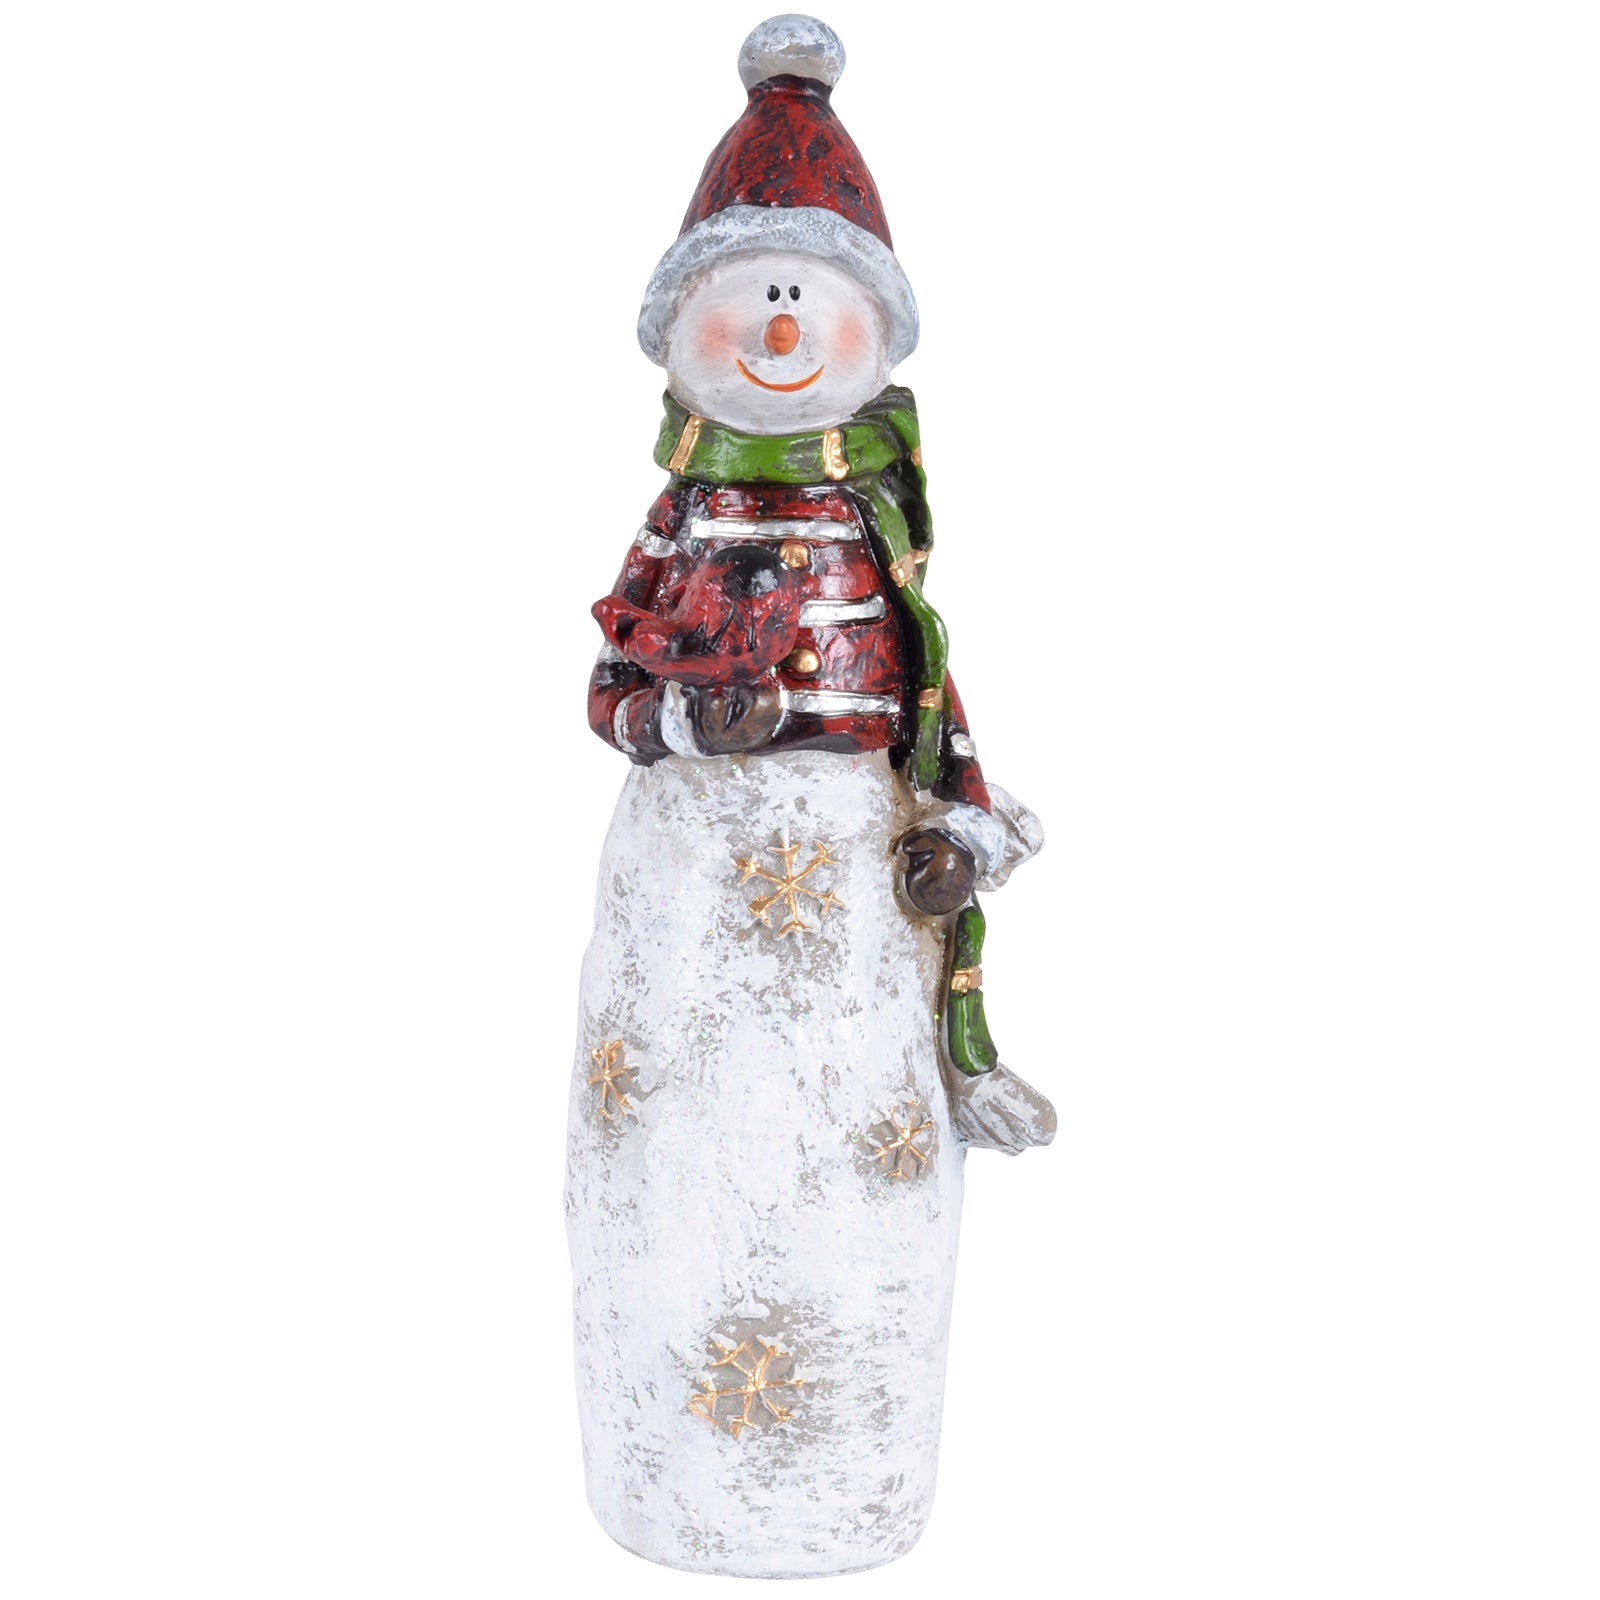 Mr Crimbo Snowman Ornament Resin Christmas Decoration - MrCrimbo.co.uk -XS4308 - 22cm -christmas decoration